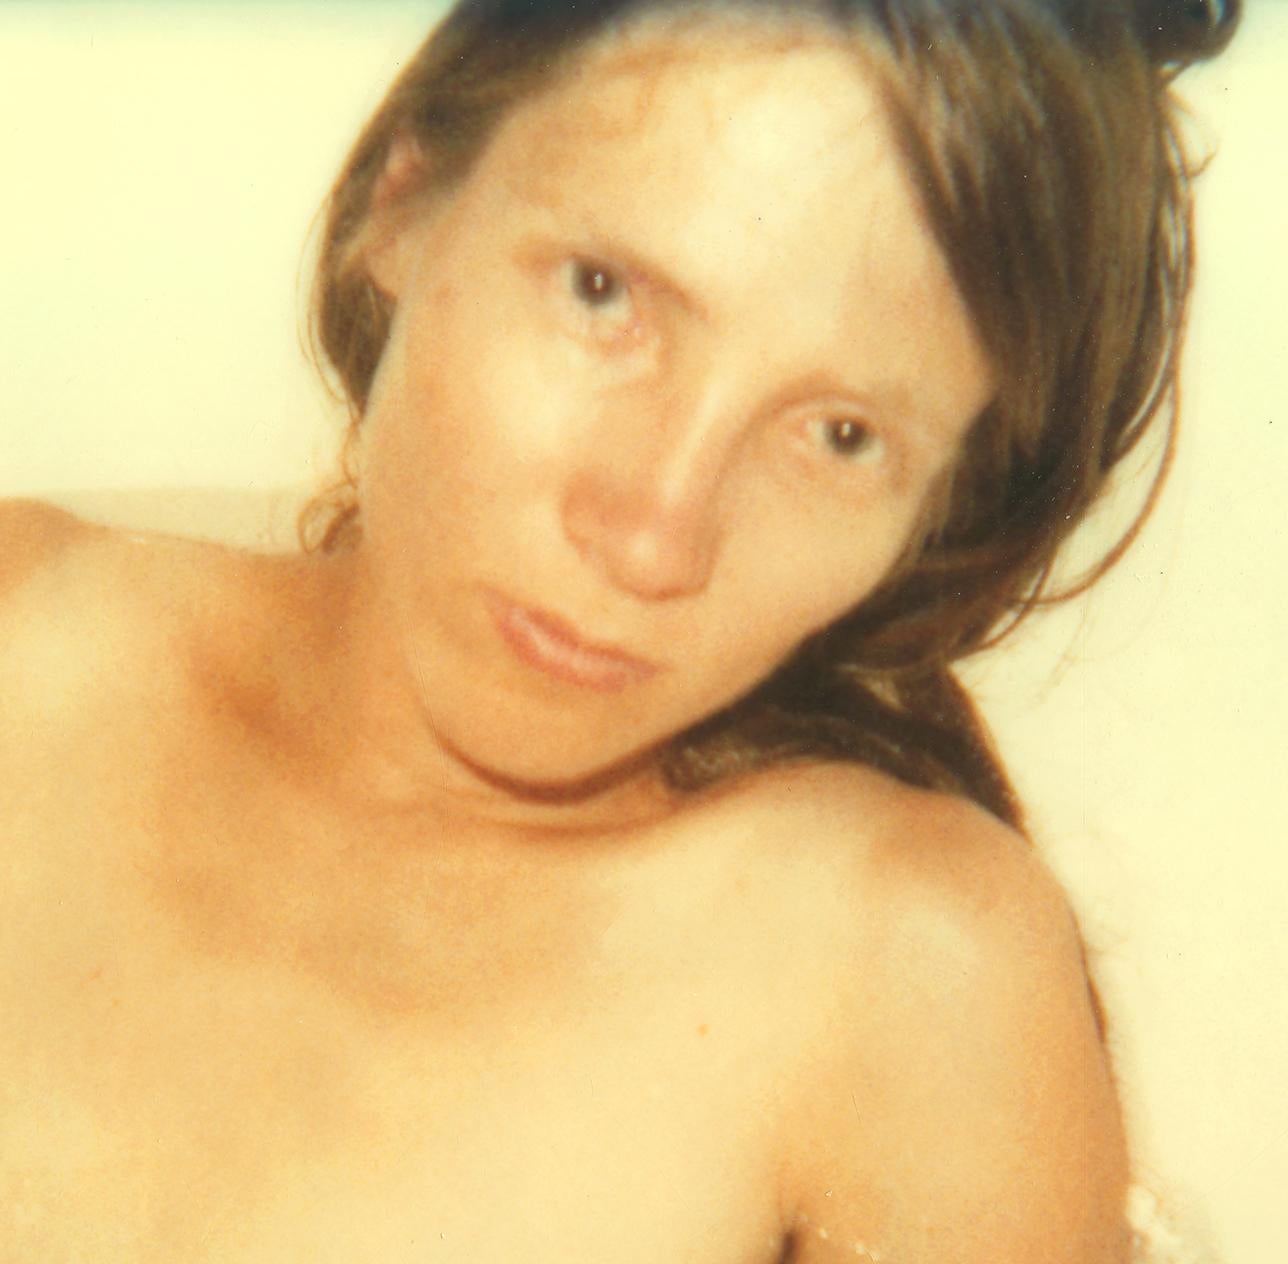 Stevie in Bathtub (29 Palms, CA) - analog, Polaroid, Contemporary For Sale 2